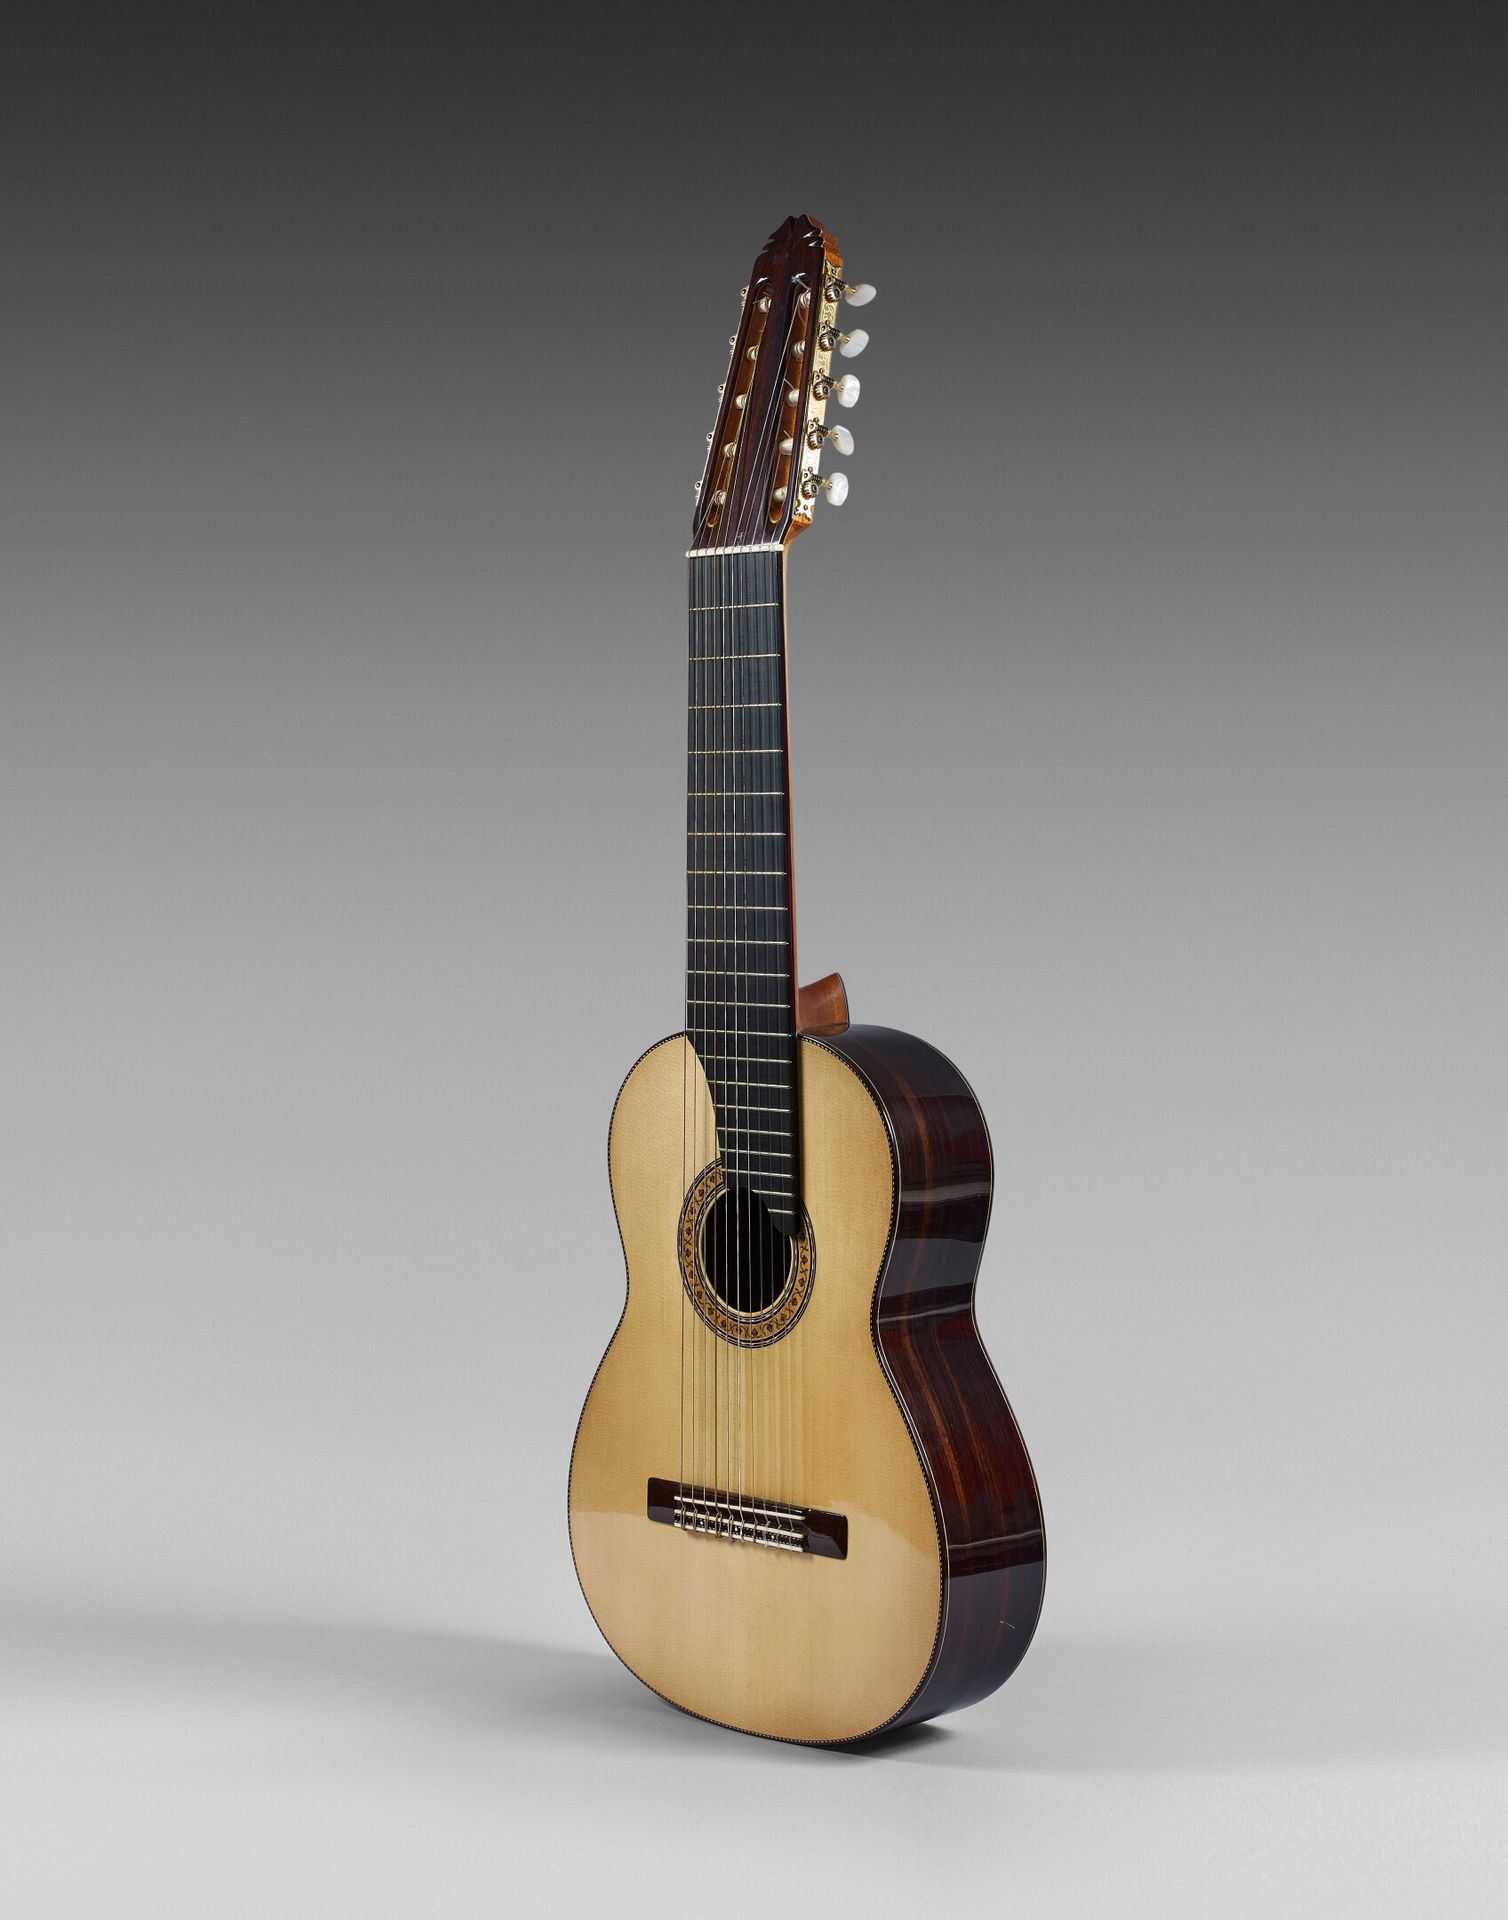 José GIMENEZ 吉他。2007年制造的C 10 n° 566型。

瓦伦西亚 西班牙

弦长：650毫米

琴头间距：86毫米

云杉木面板，印度黑檀&hellip;